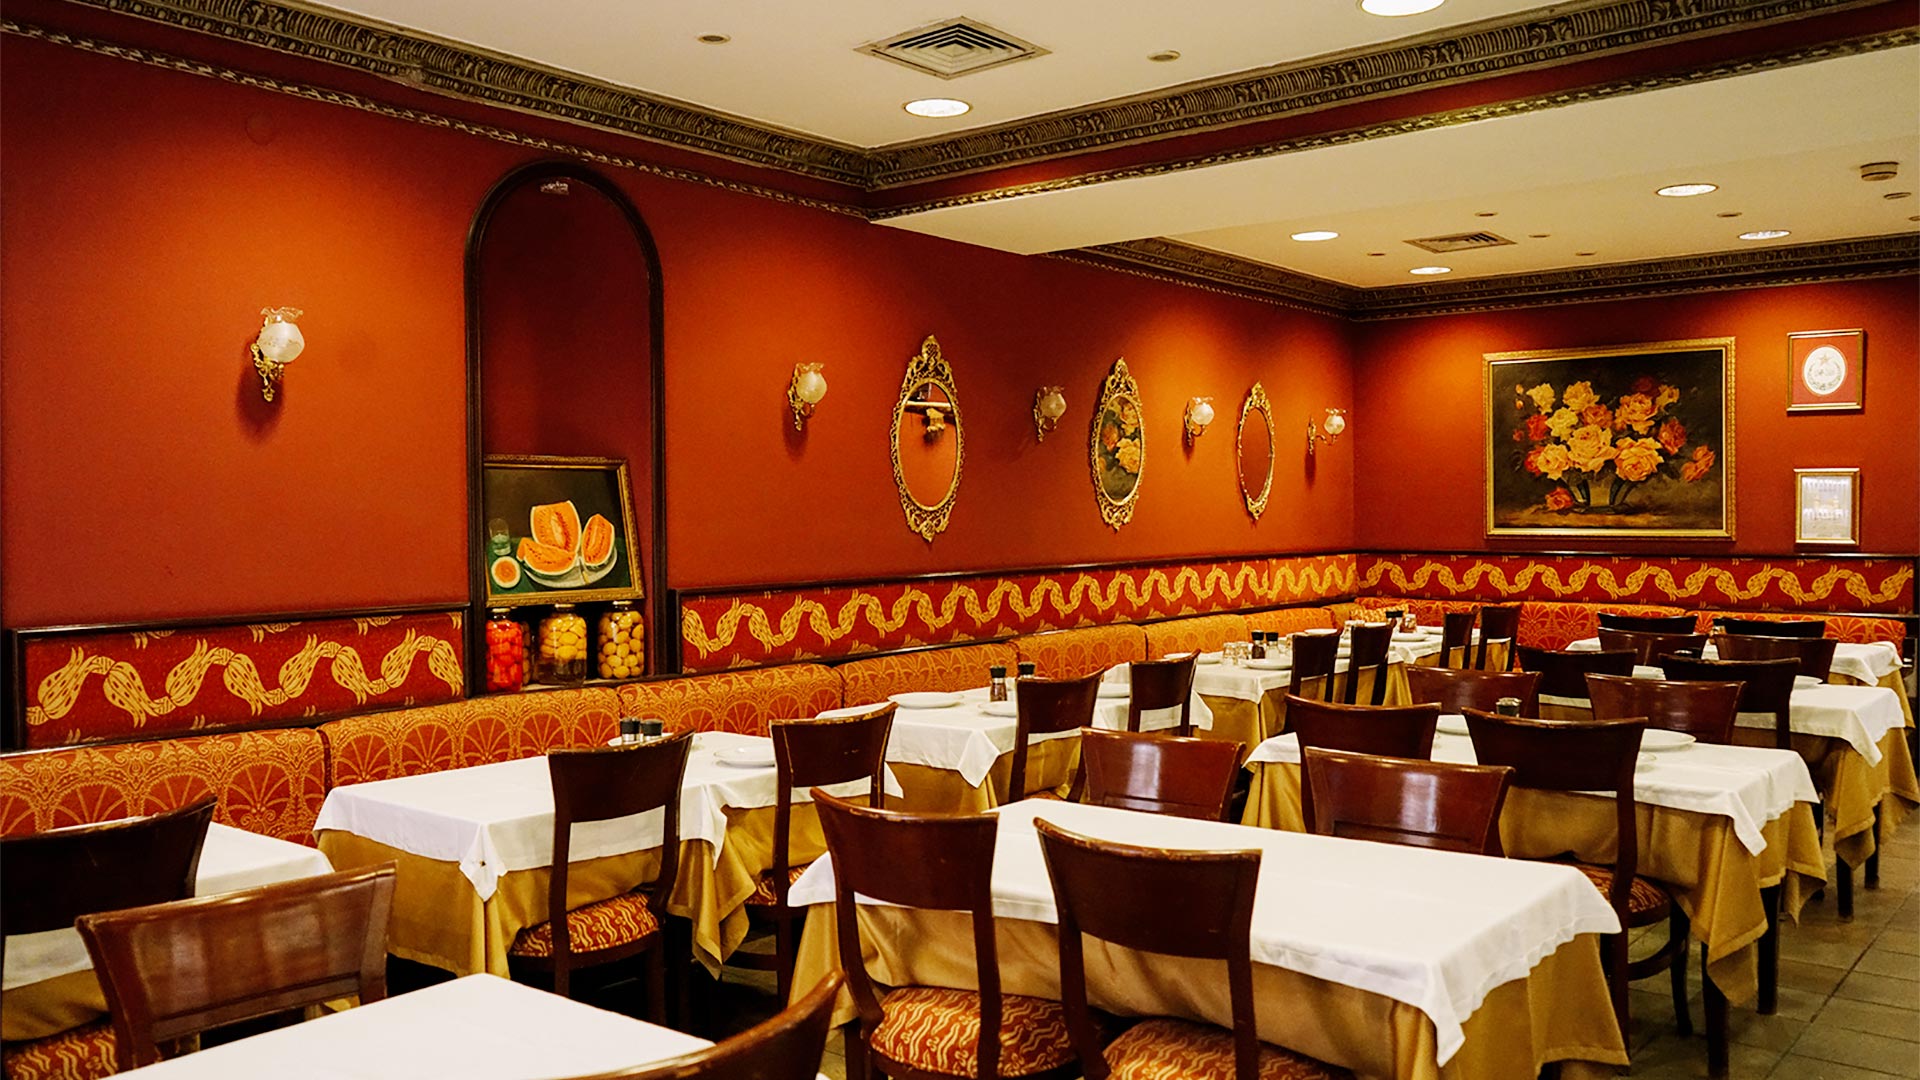 Haci Abdullah Restaurant 1888